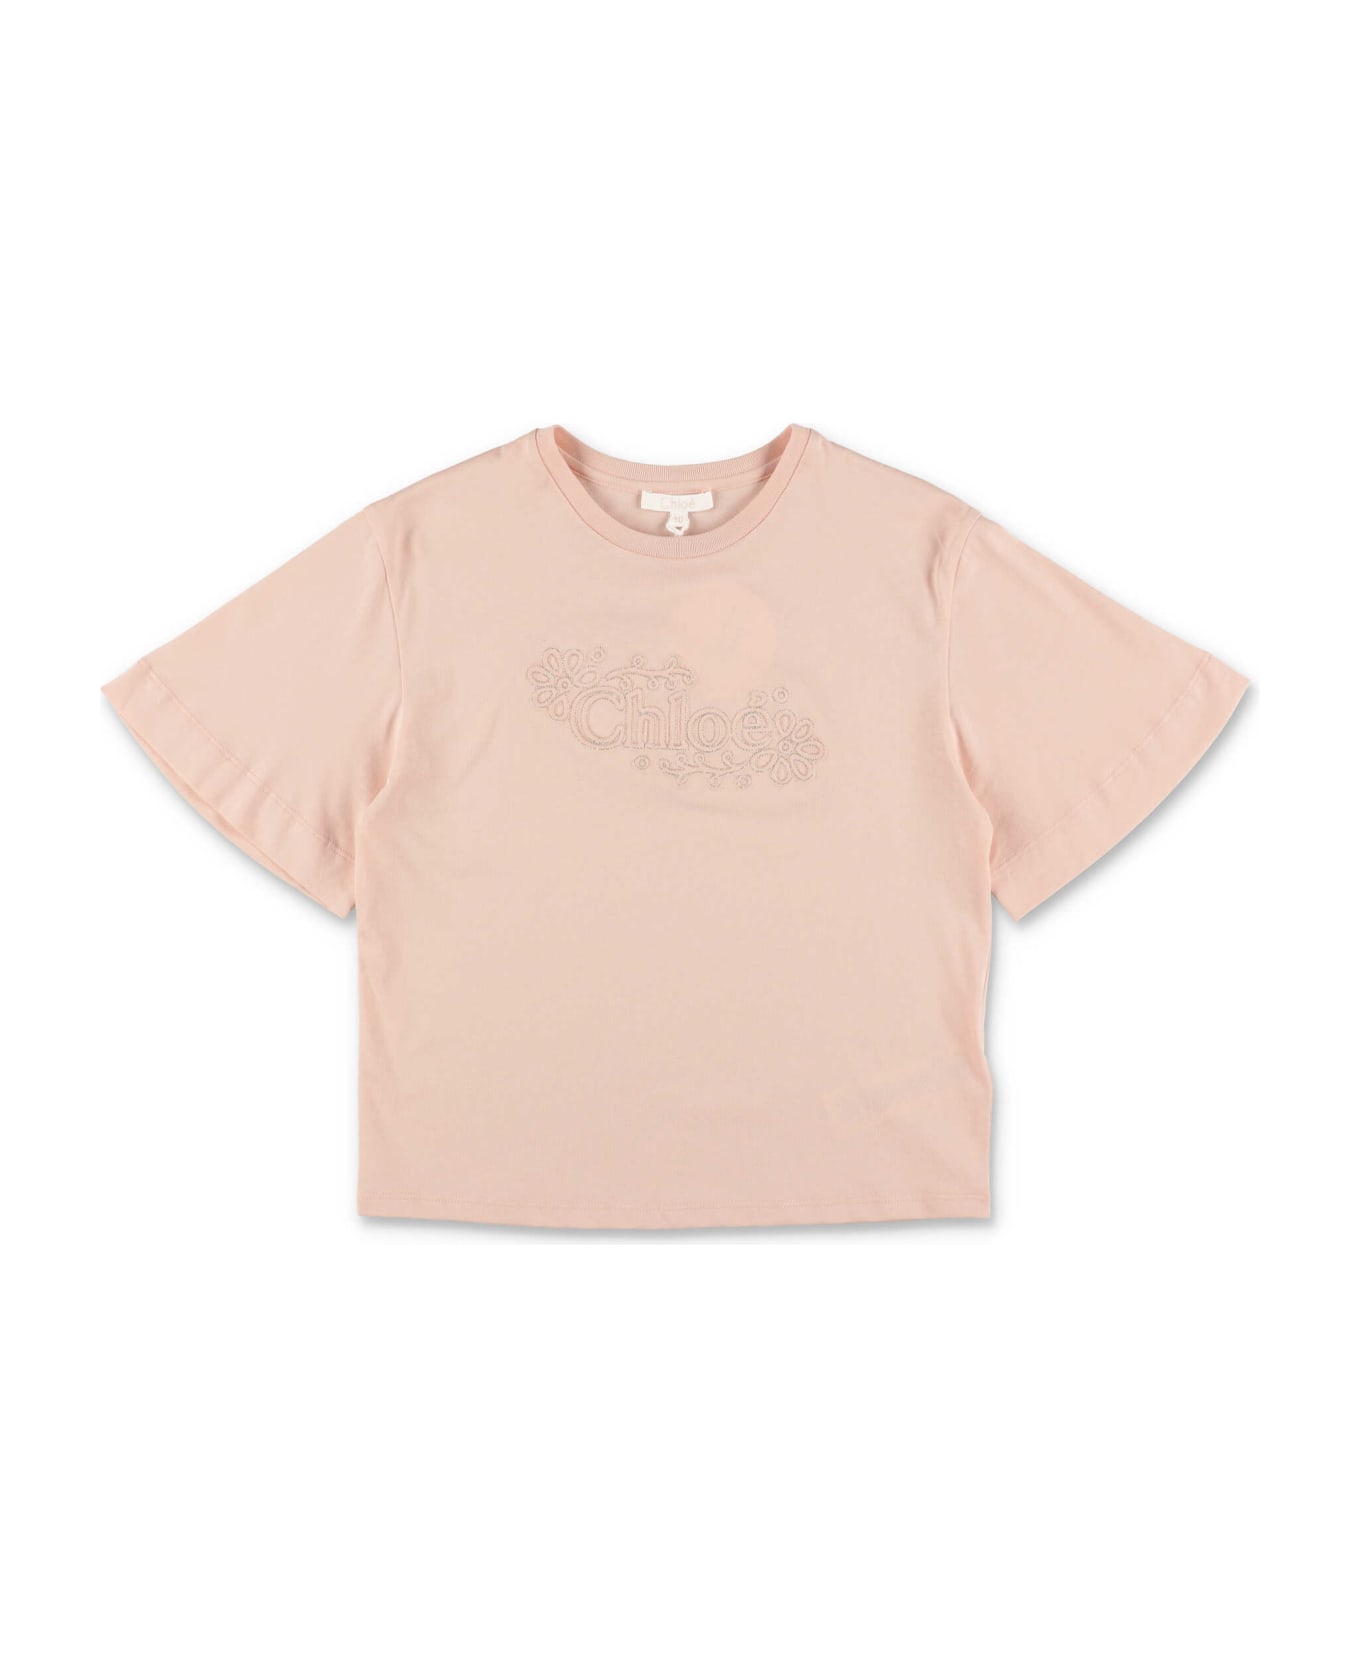 Chloé Chloe T-shirt Rosa In Jersey Di Cotone Bambina - Rosa